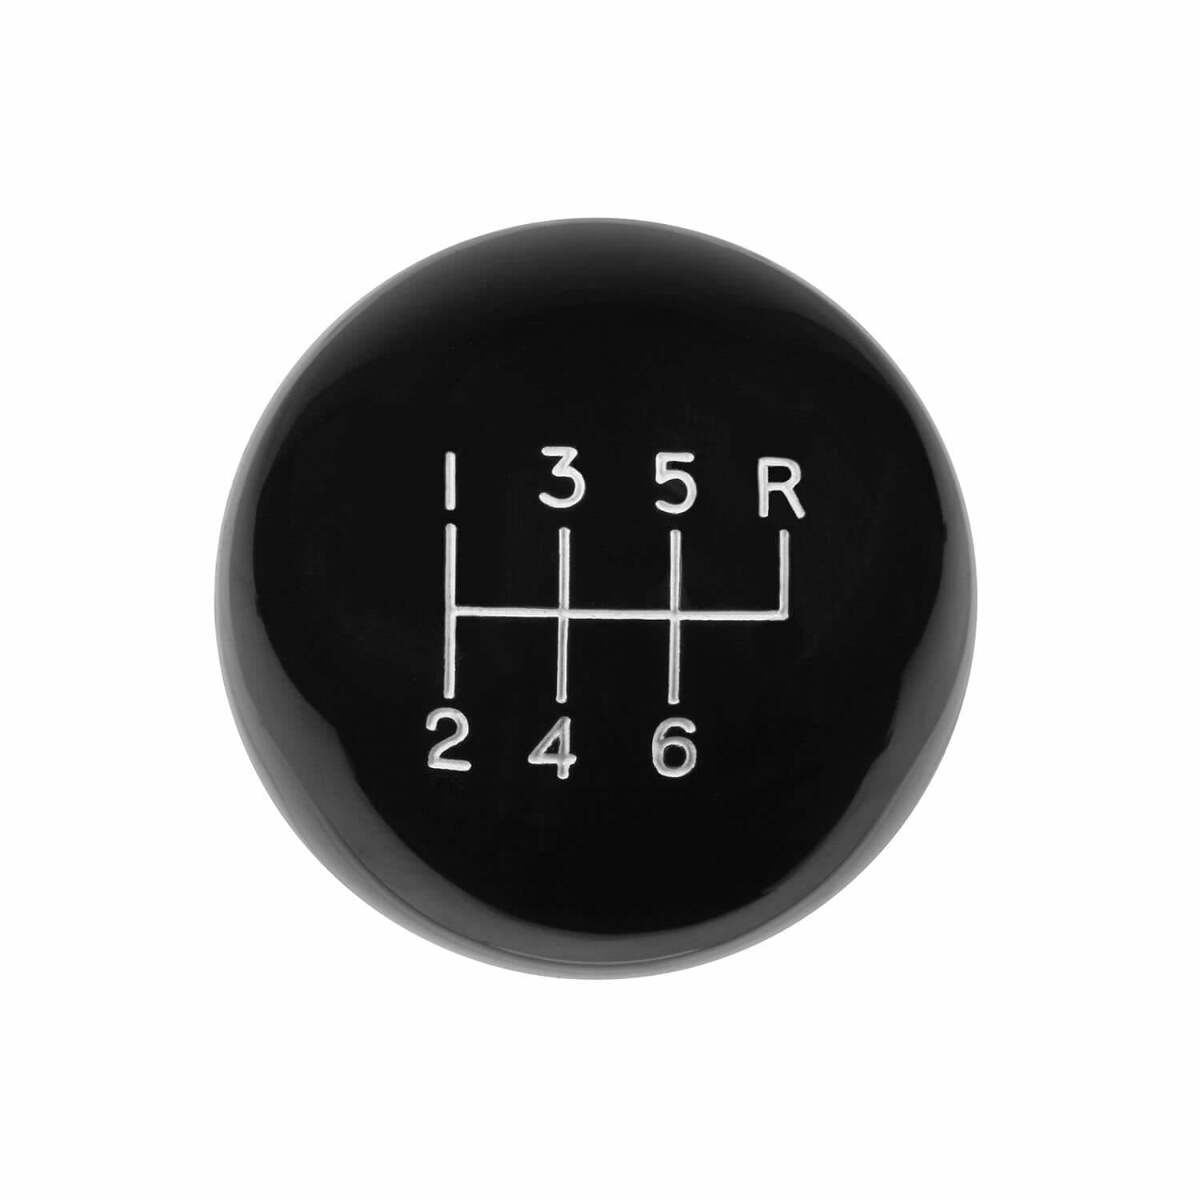 Hurst Shift Knob - Black 6 Speed 3/8-16 Threads - 1630140